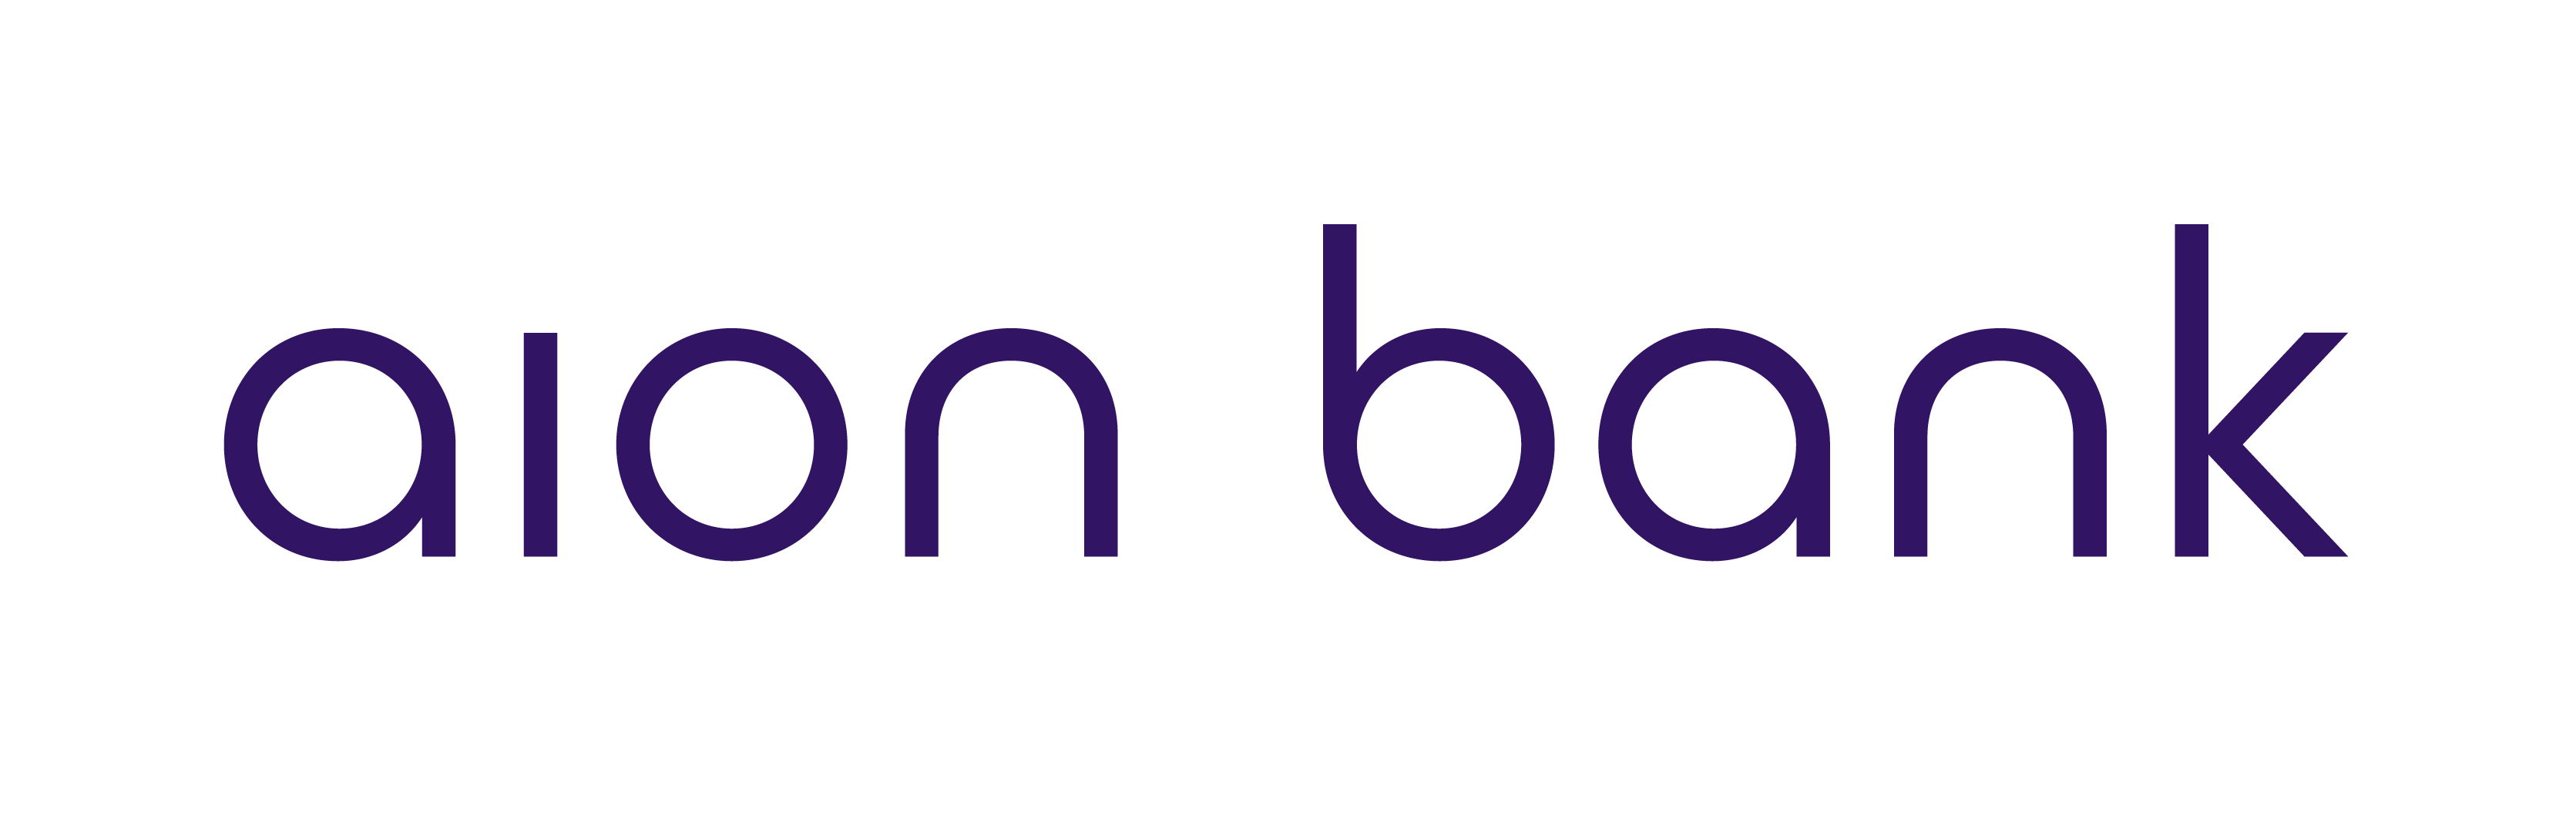 Aion Bank's logo